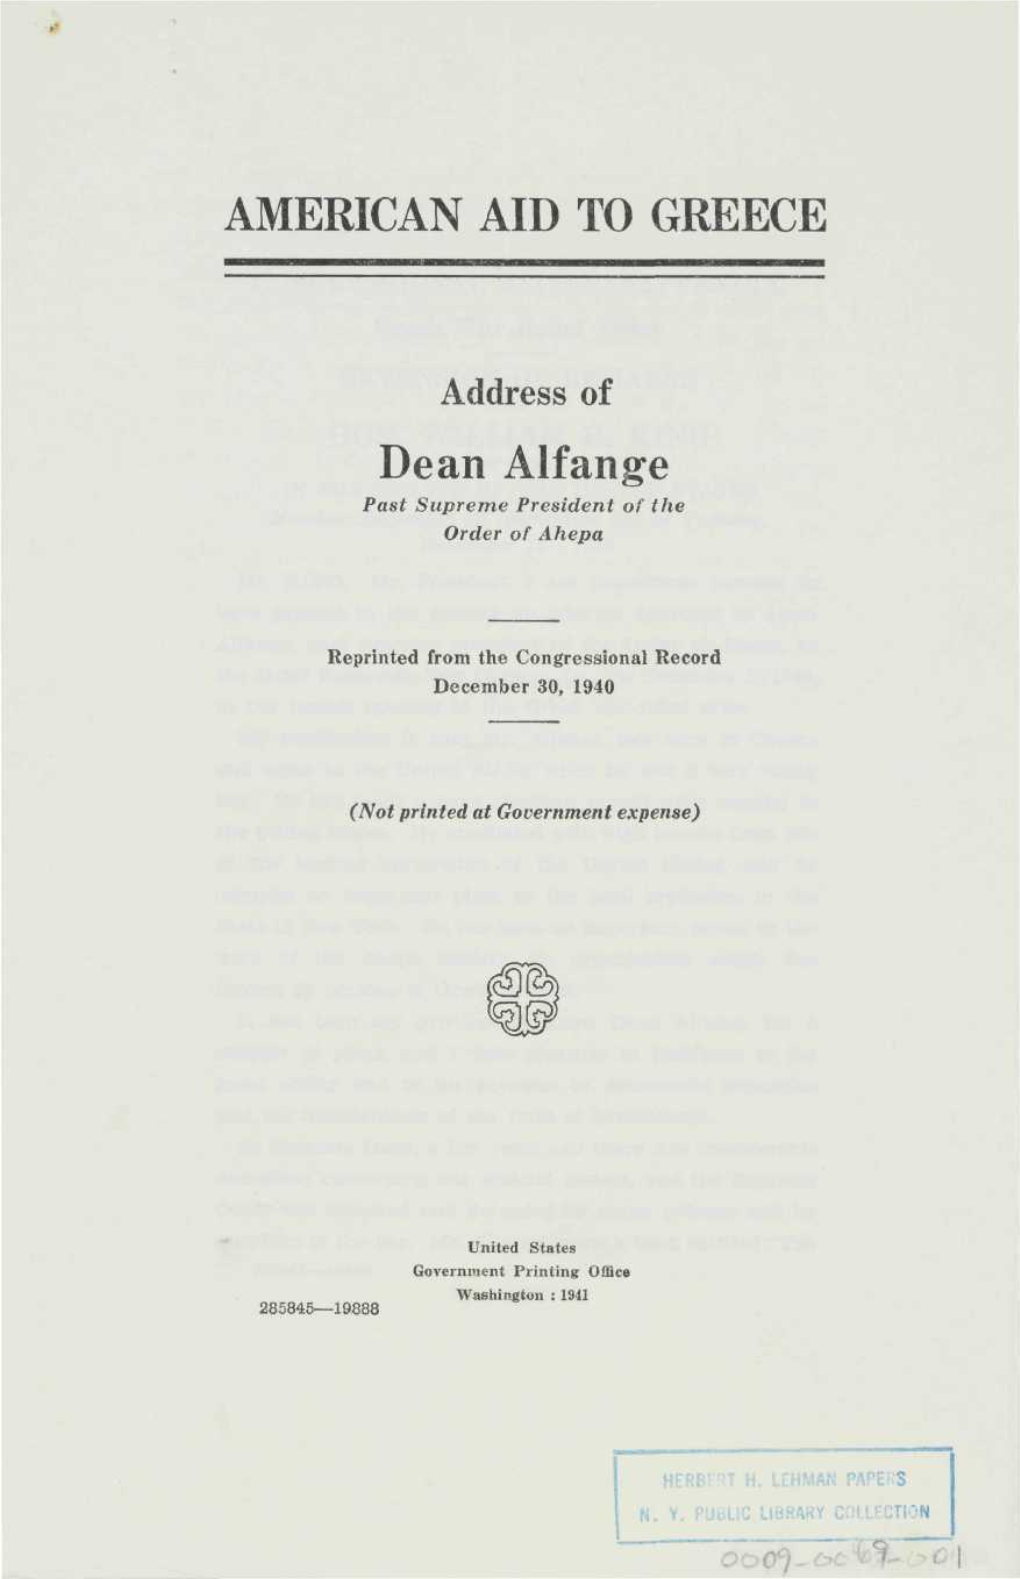 Dean Alfange Past Supreme President of the Order of Ahepa